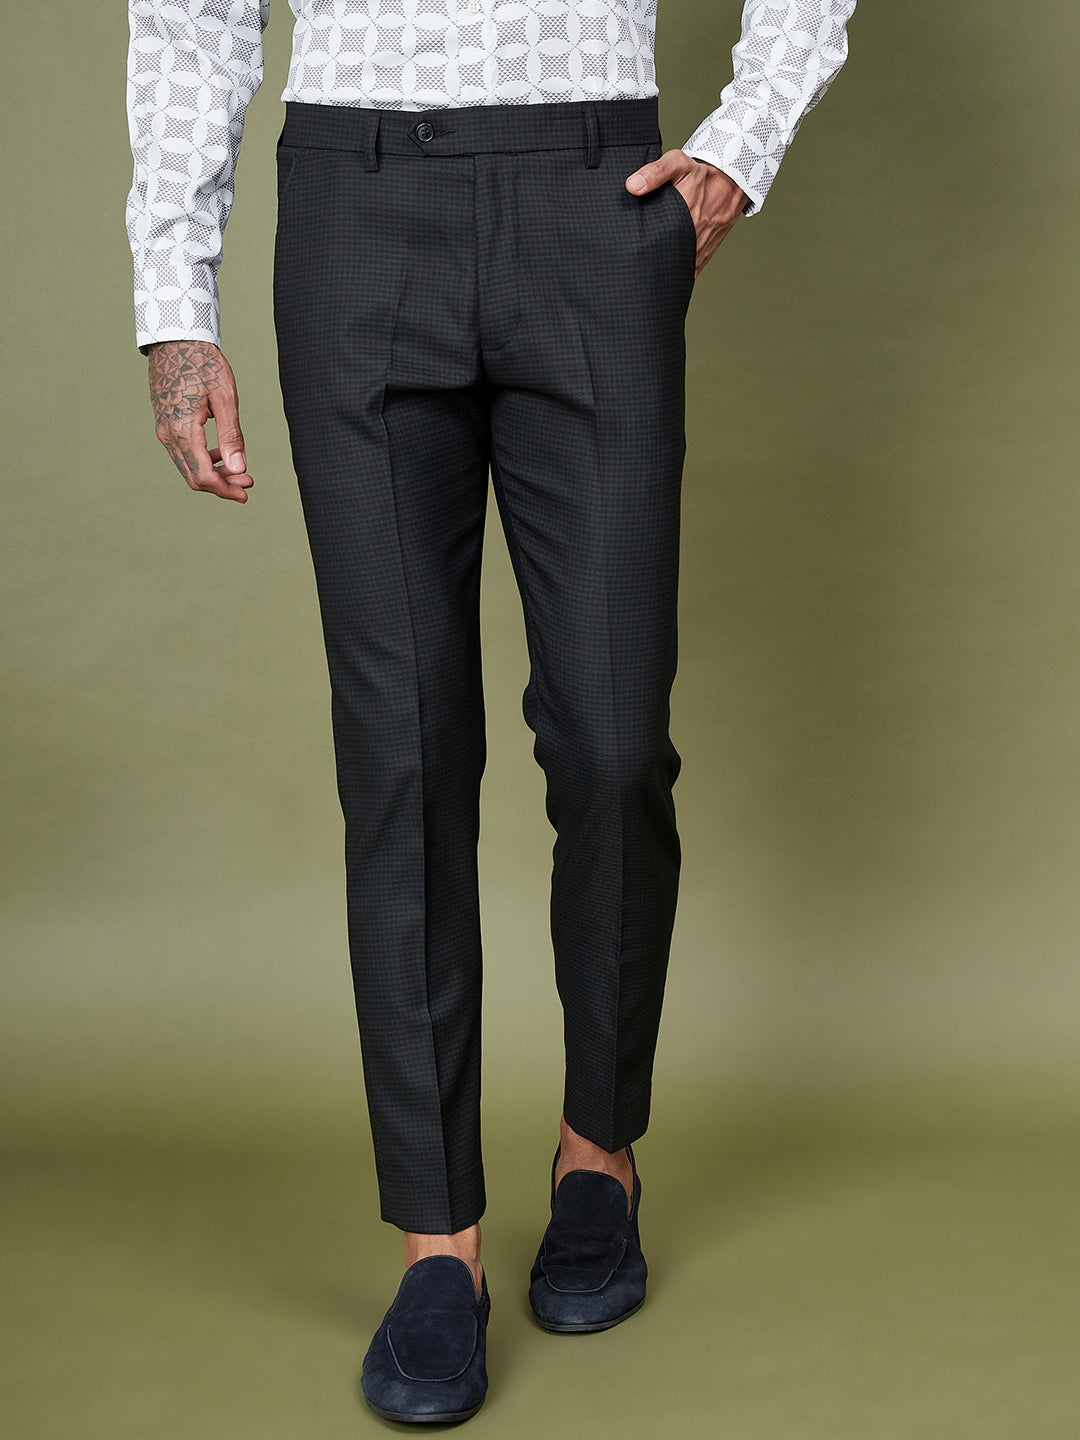 MODA NOVA Big & Tall Men's Plaid Jogger Pants Slim Fit Check Trousers Black  Khaki LT(US 34) - Walmart.com